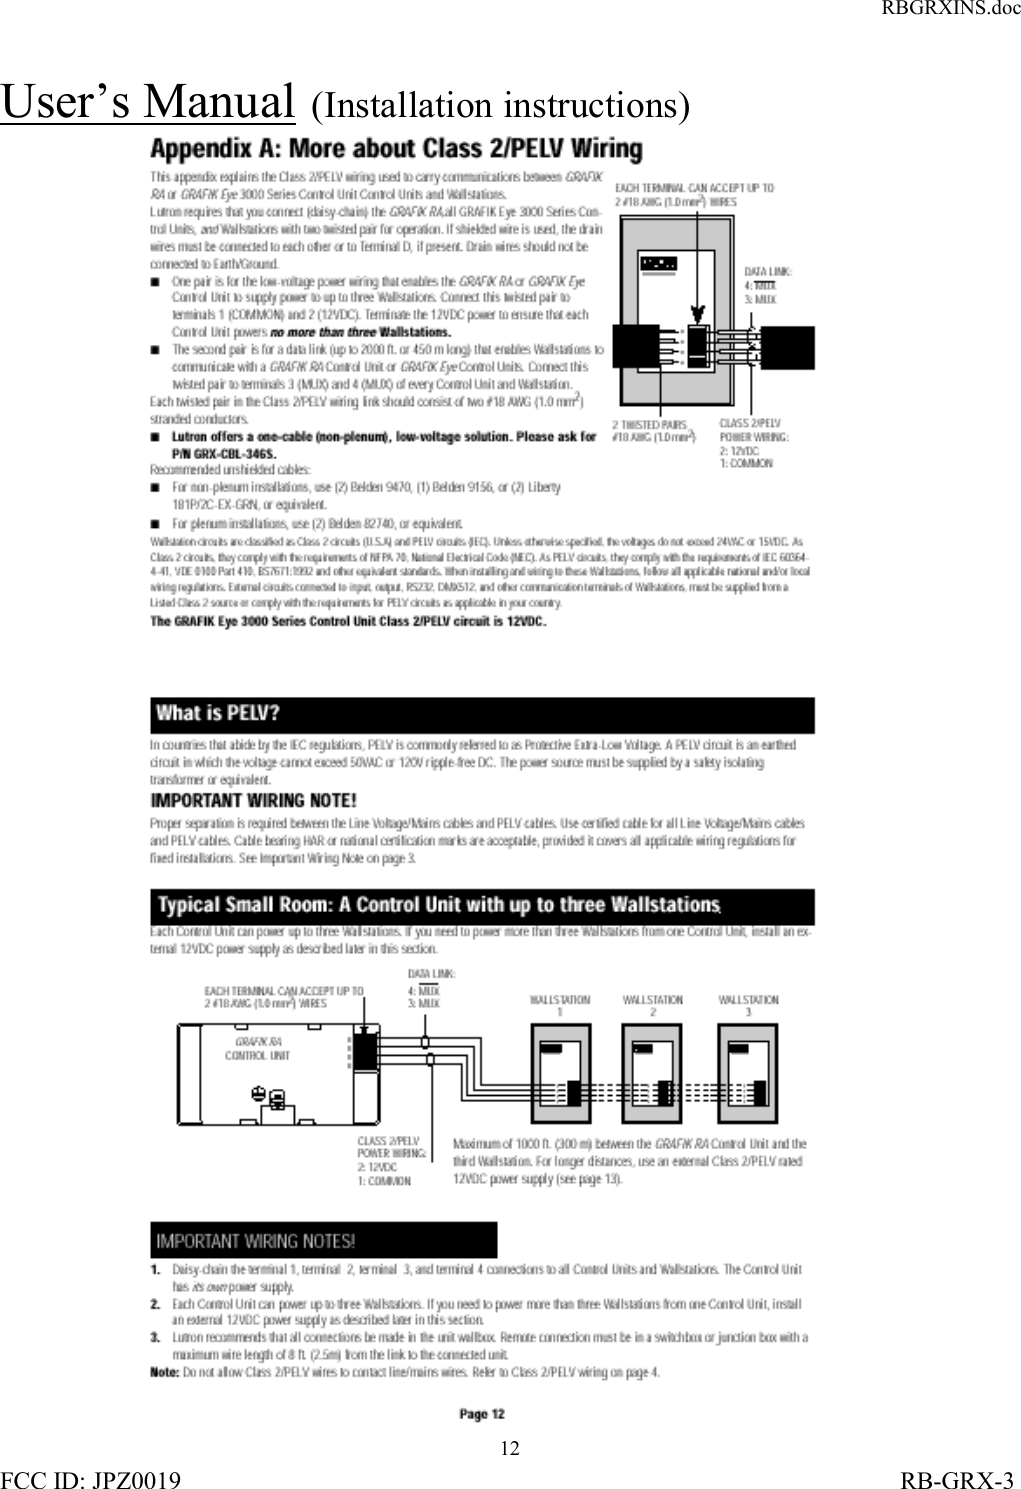 RBGRXINS.docFCC ID: JPZ0019                                                                                                                   RB-GRX-312User’s Manual  (Installation instructions)